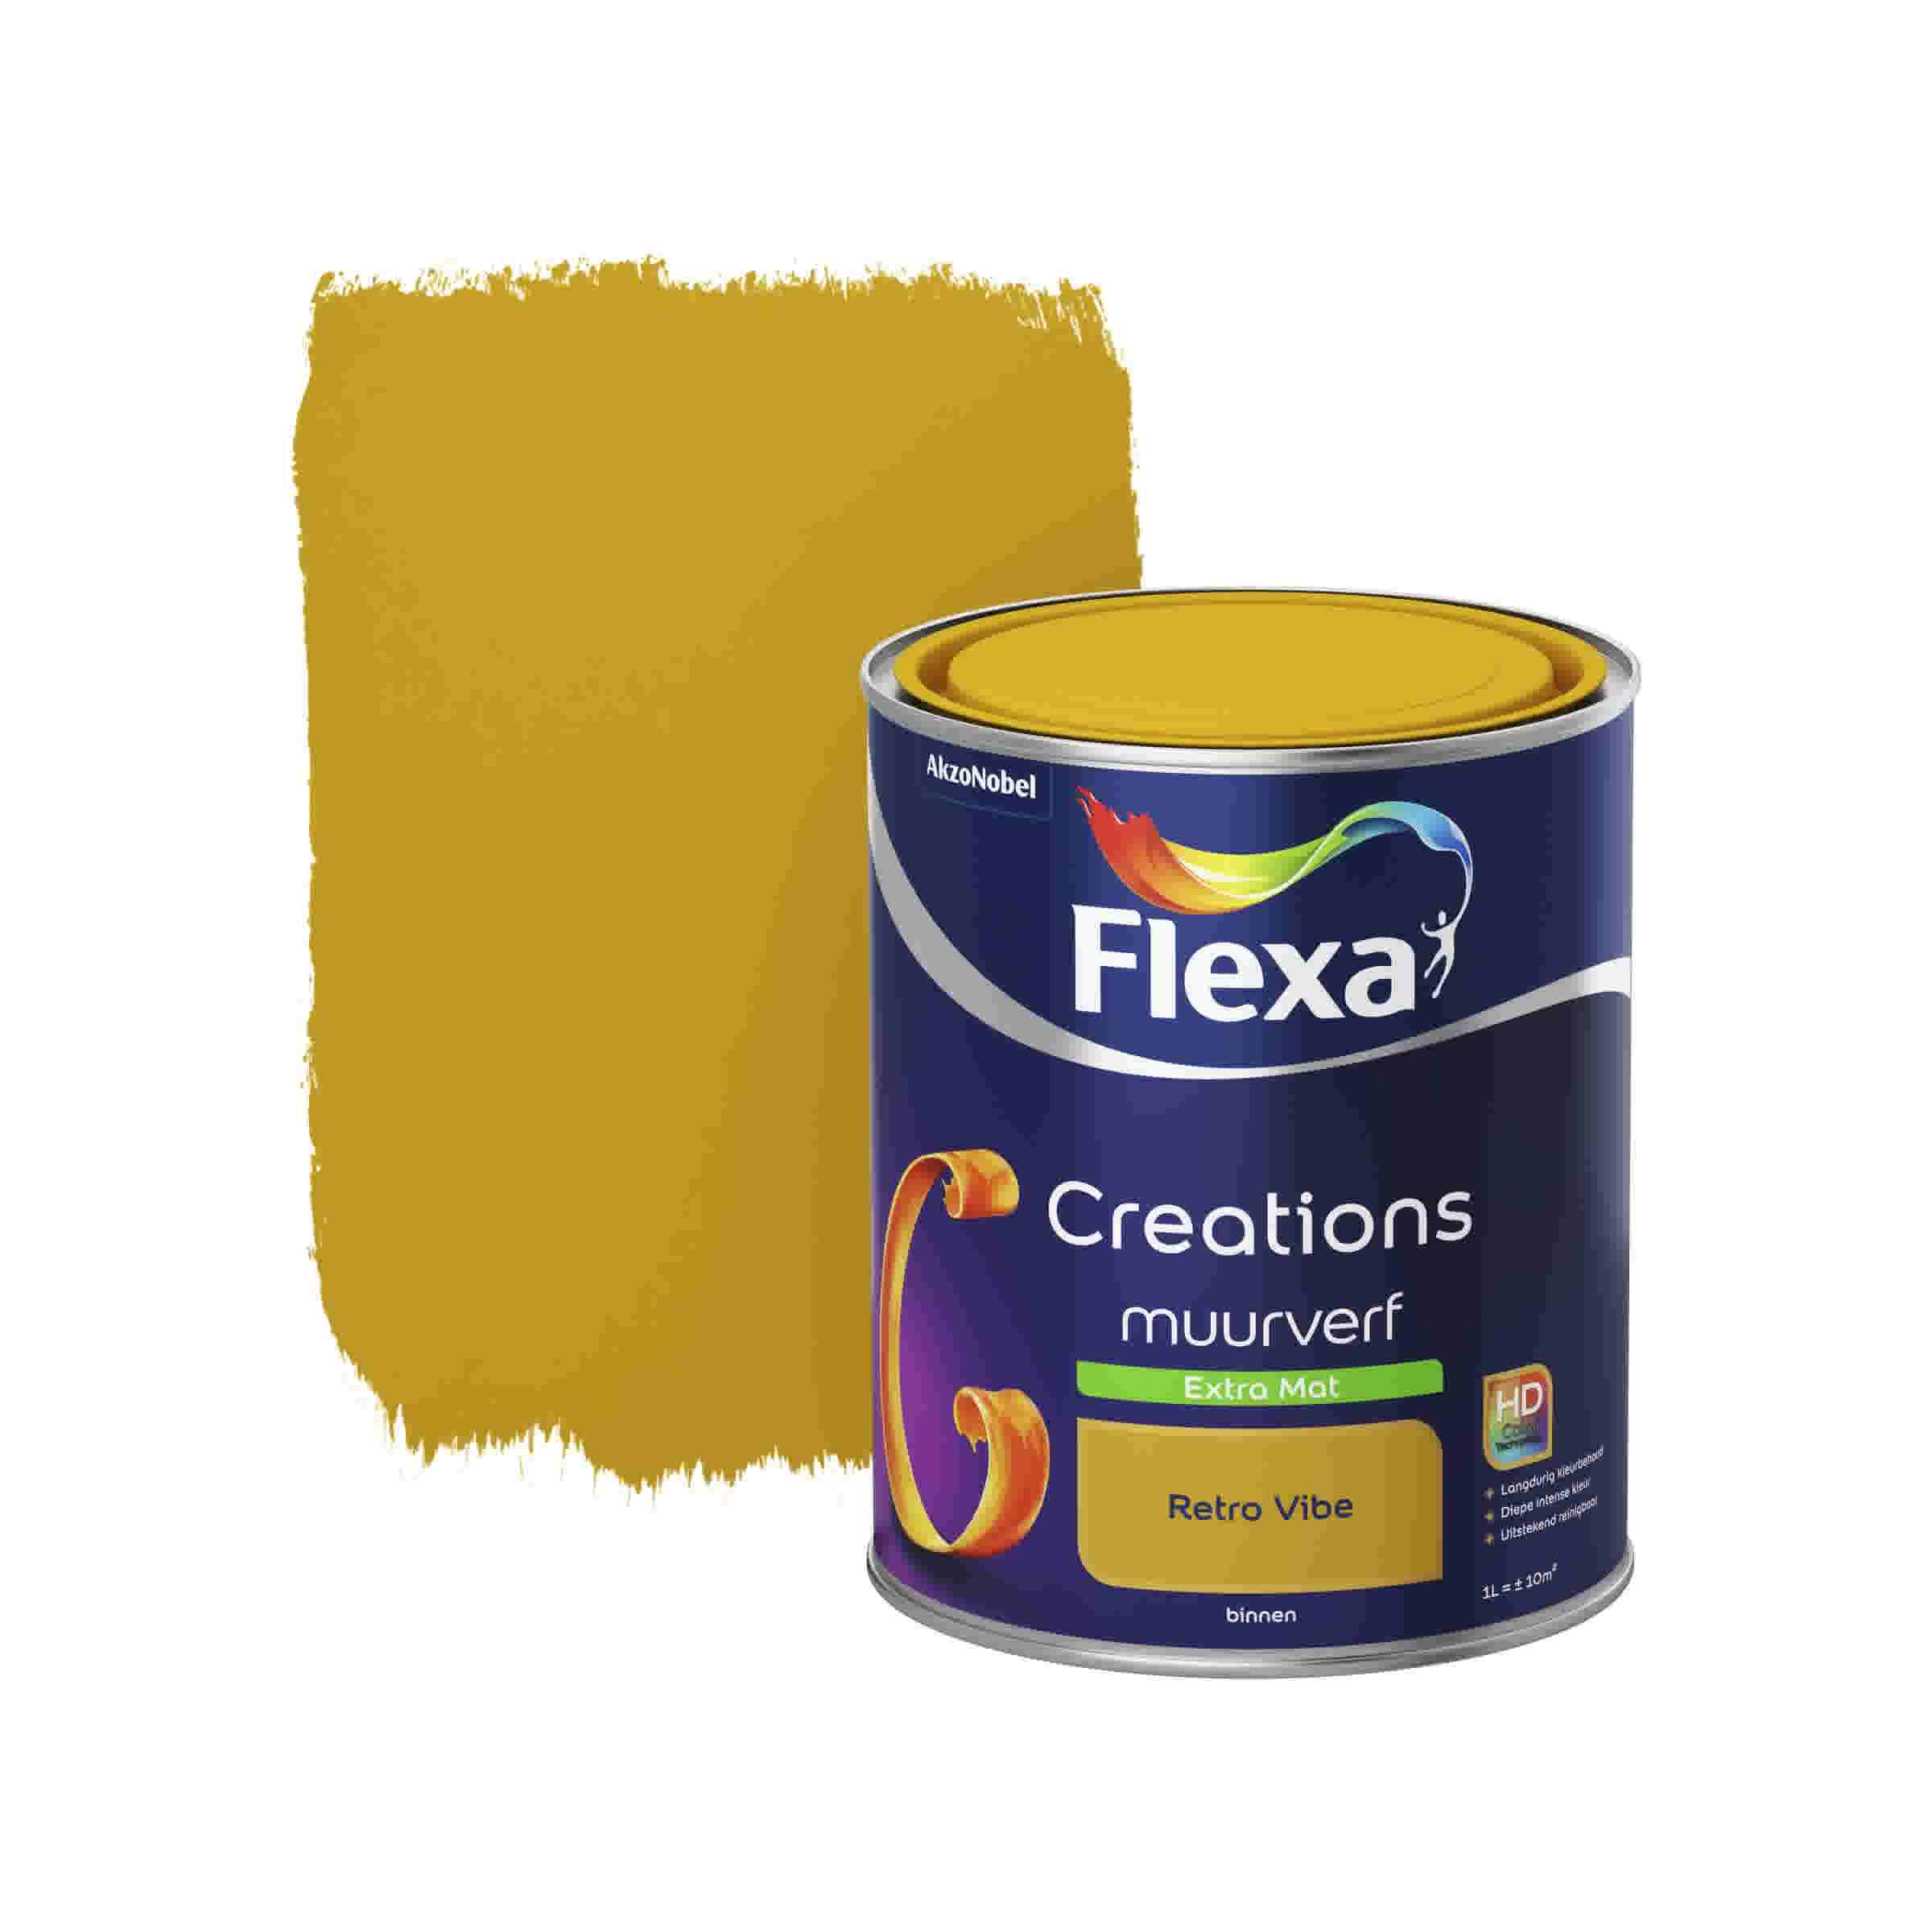 Flexa Creations muurverf extra mat retro vibe 1 l